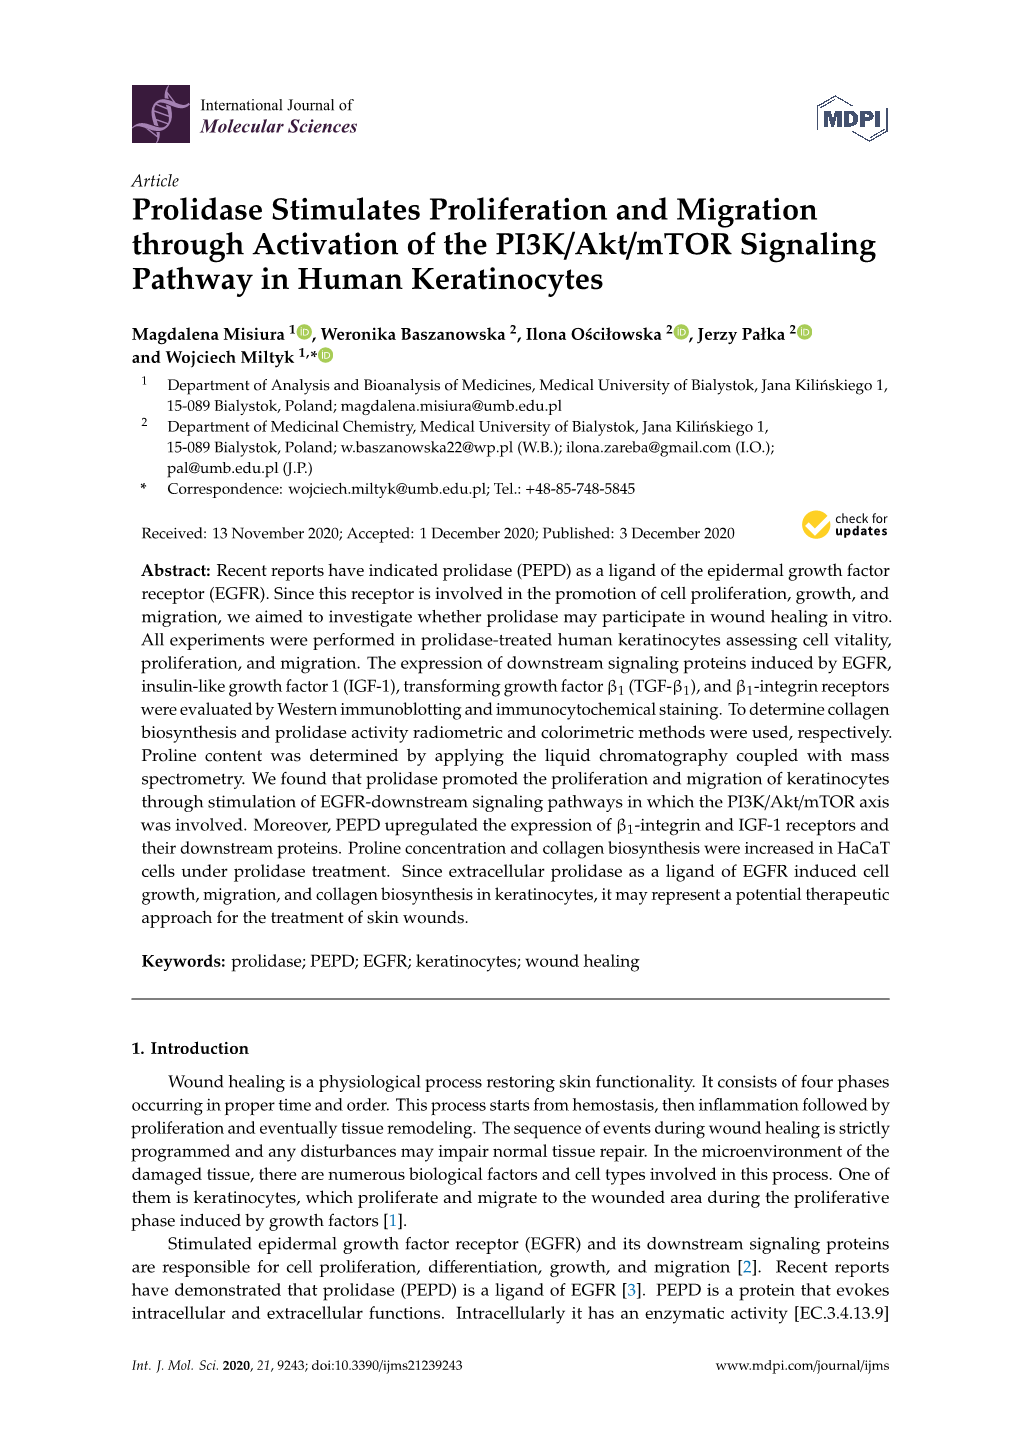 Prolidase Stimulates Proliferation and Migration Through Activation of the PI3K/Akt/Mtor Signaling Pathway in Human Keratinocytes